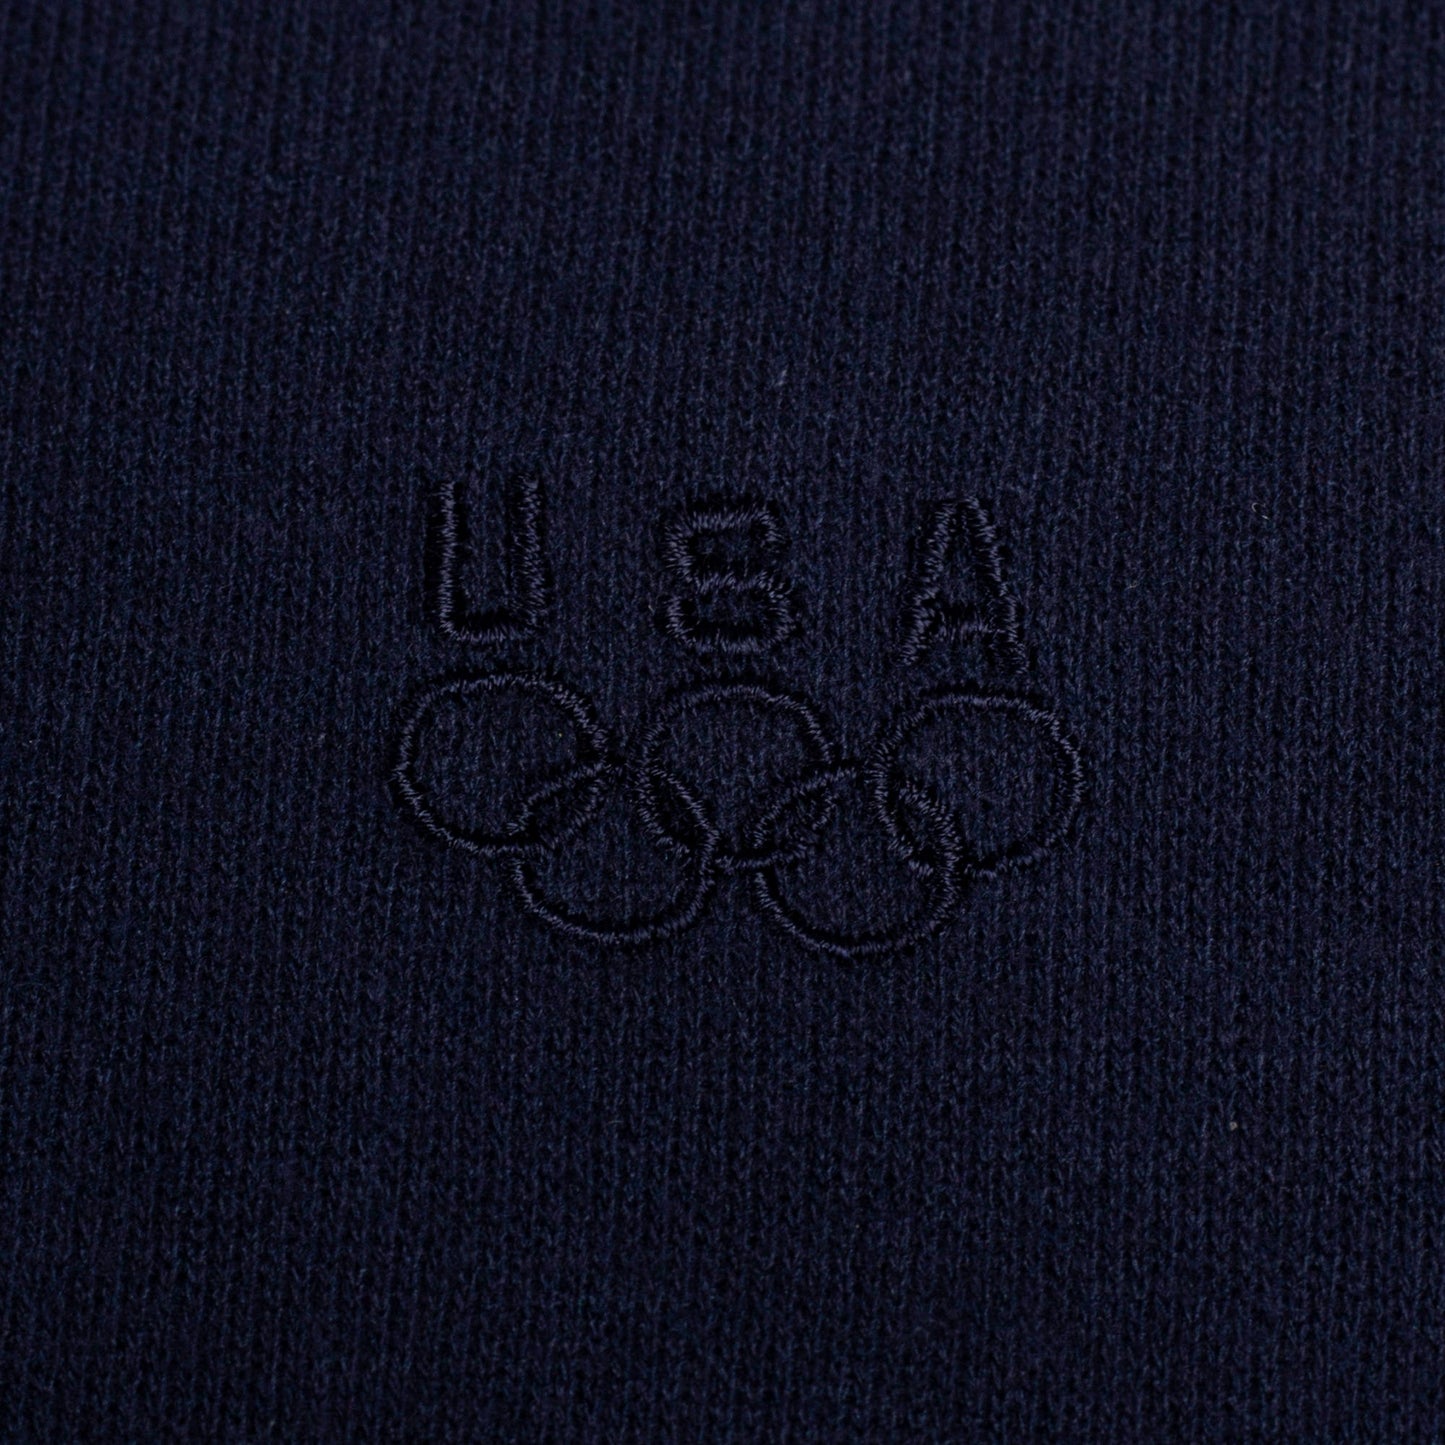 90s USA Olympics Sweatshirt - Men's Large, Women's XL | Vintage Navy Blue Crew Neck Pullover